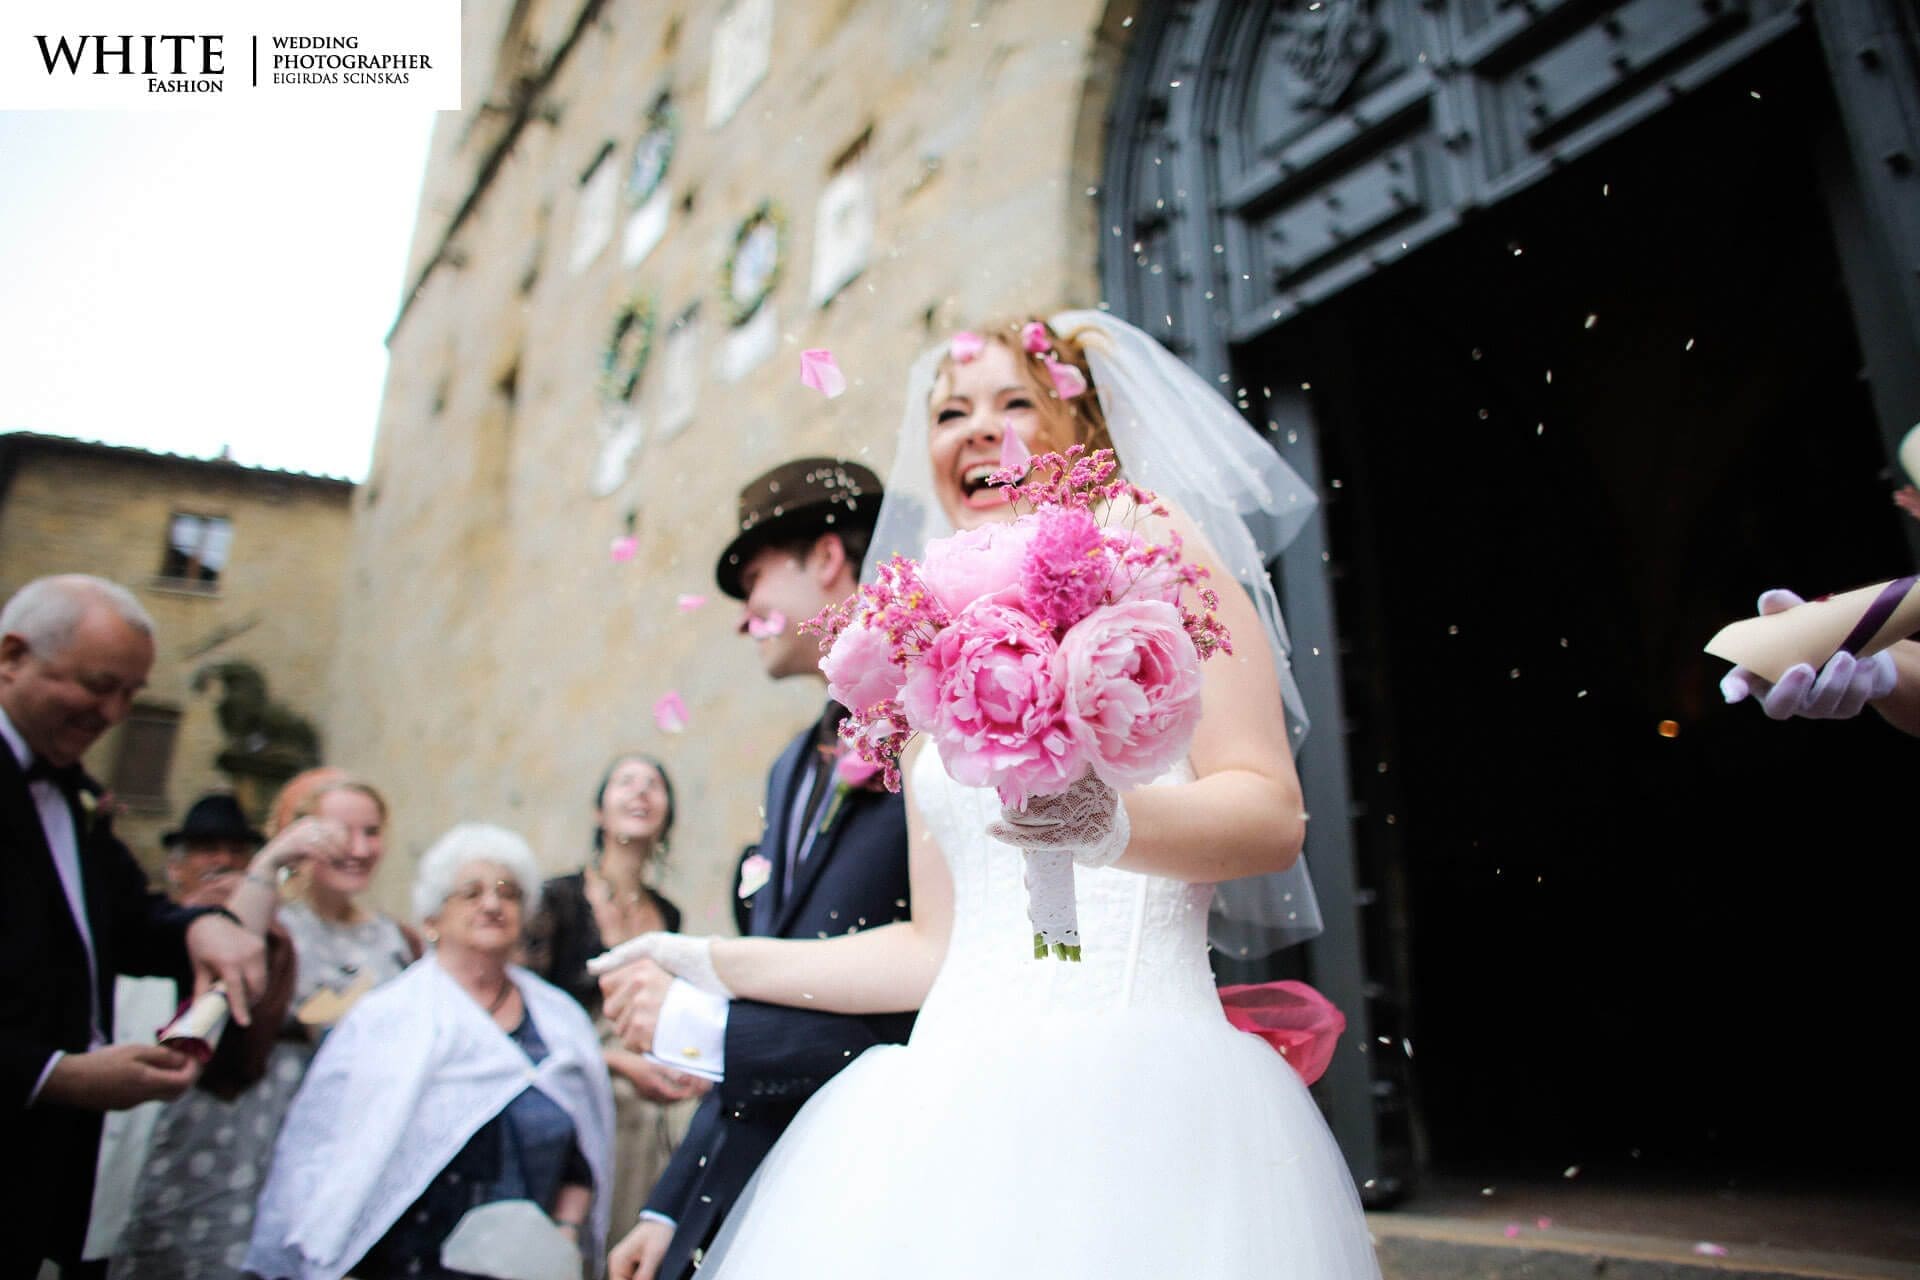 Wedding in Volterra white fashion photographer russian citizens